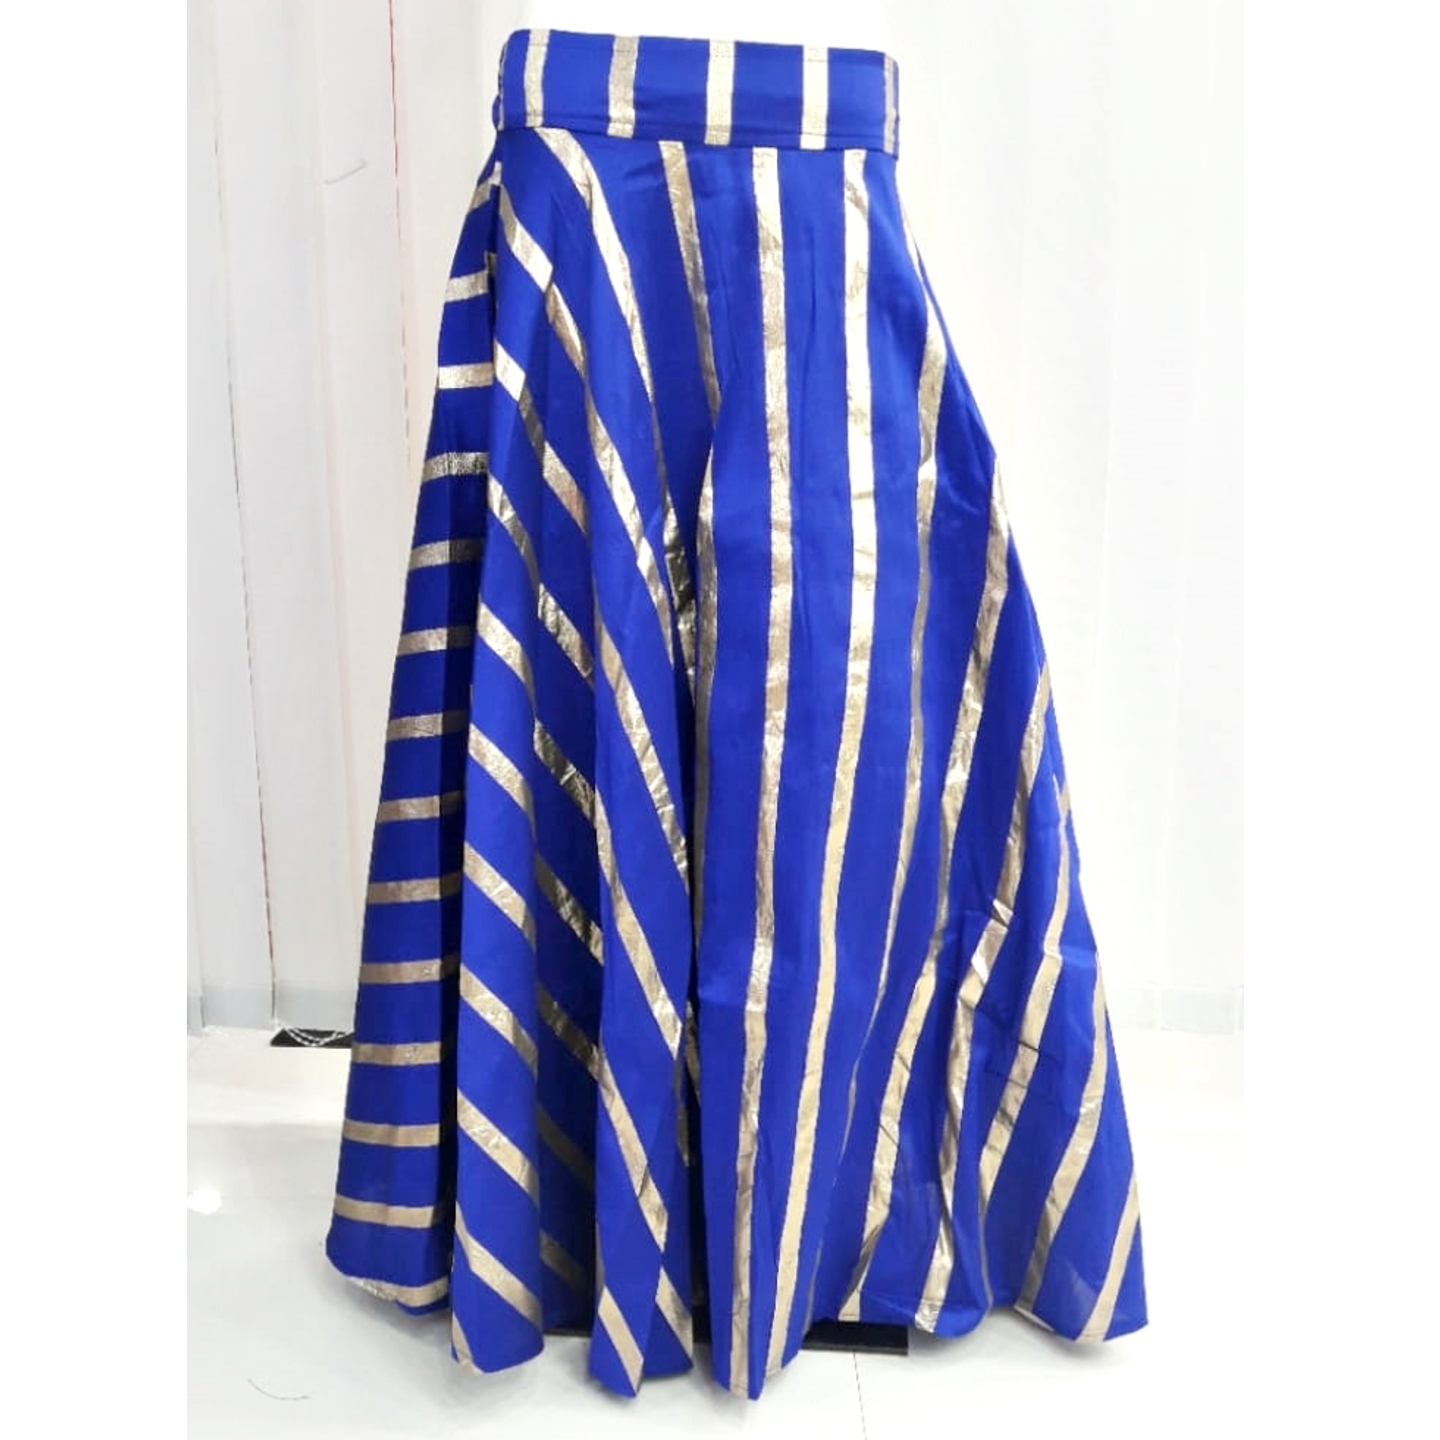 Fusion Skirt - Stripes